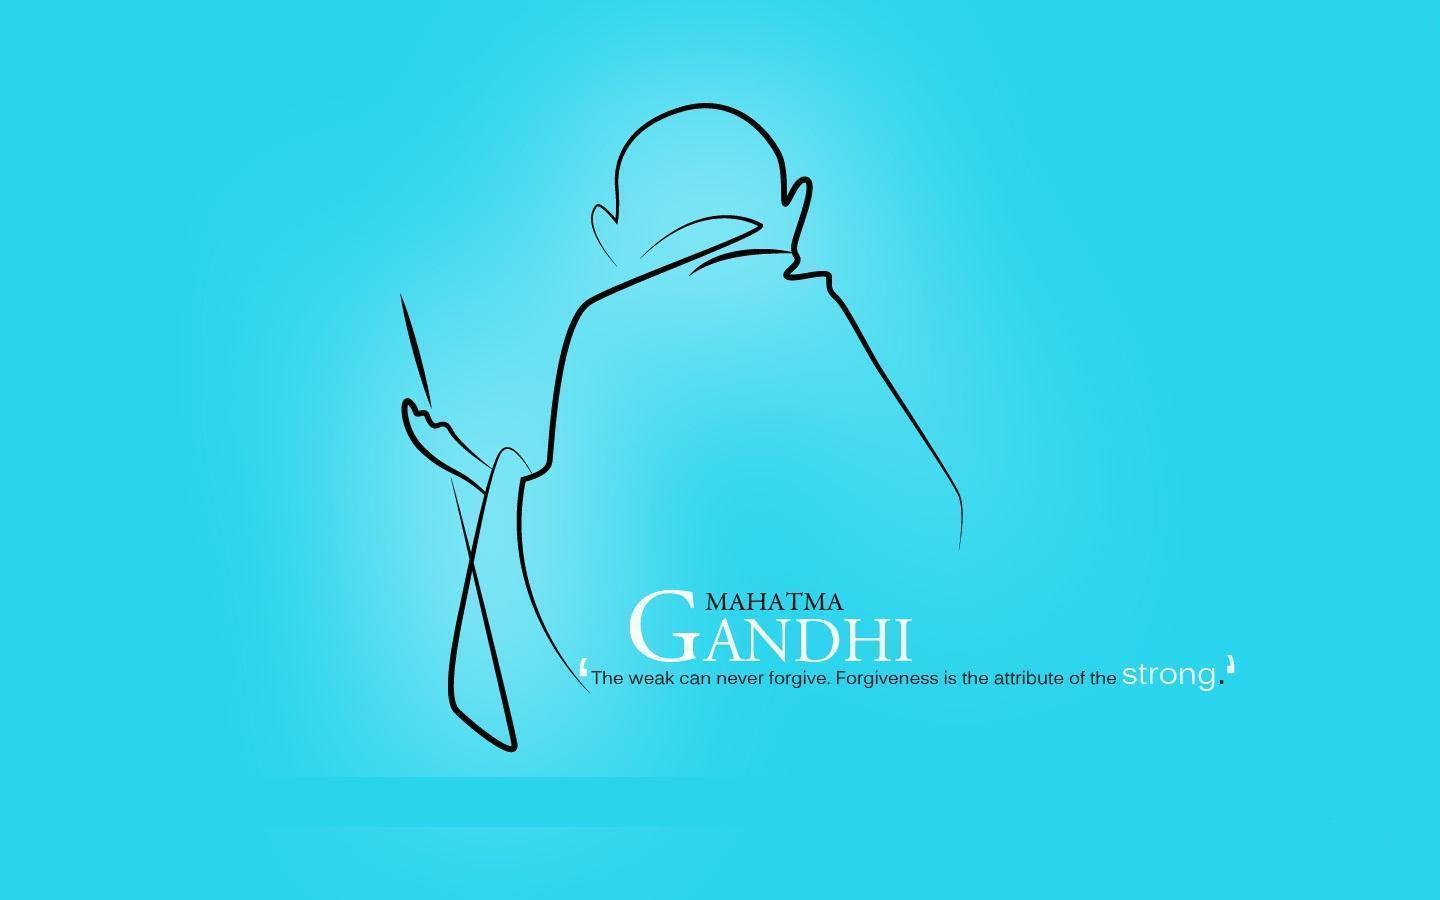 gandhi jayanti HD wallpaper. Mahatma Gandhi Jayanti 2nd October